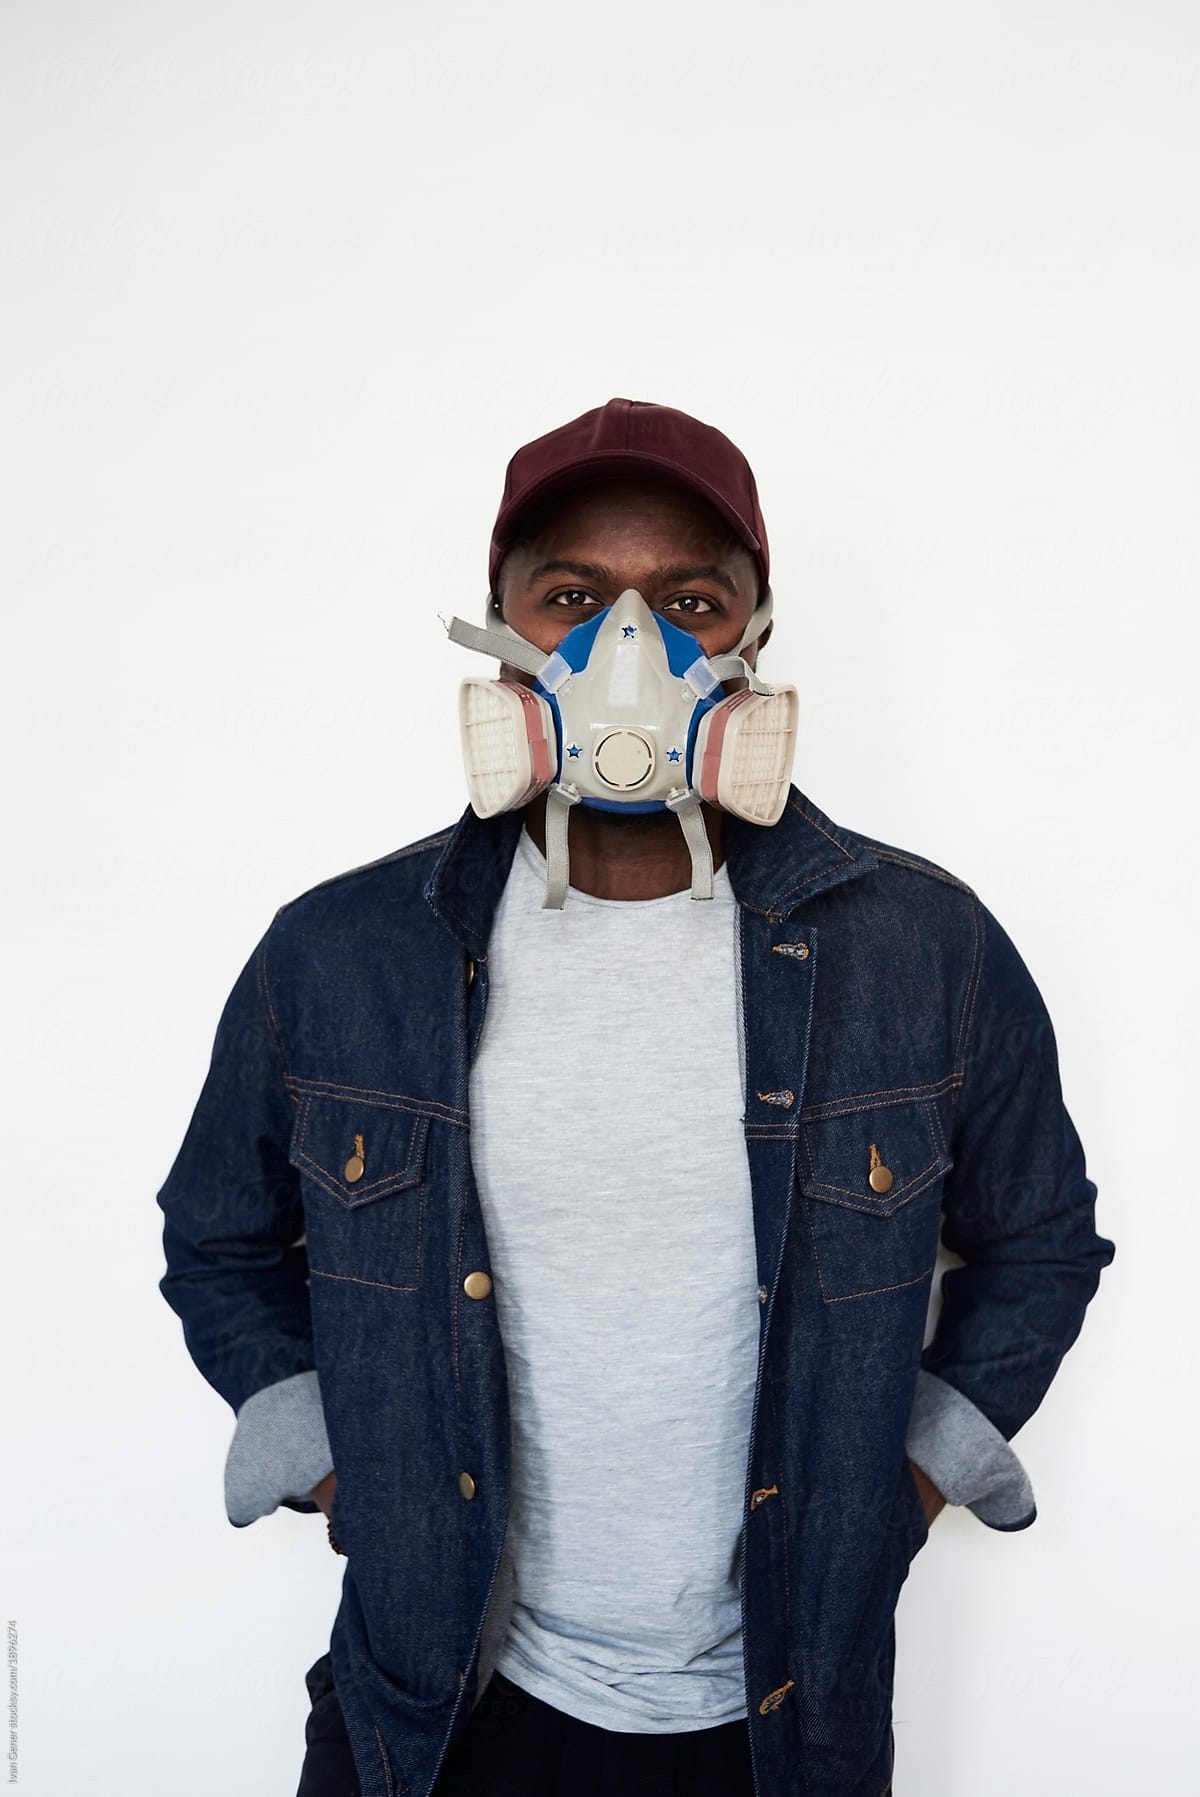 Black male wearing a gas mask